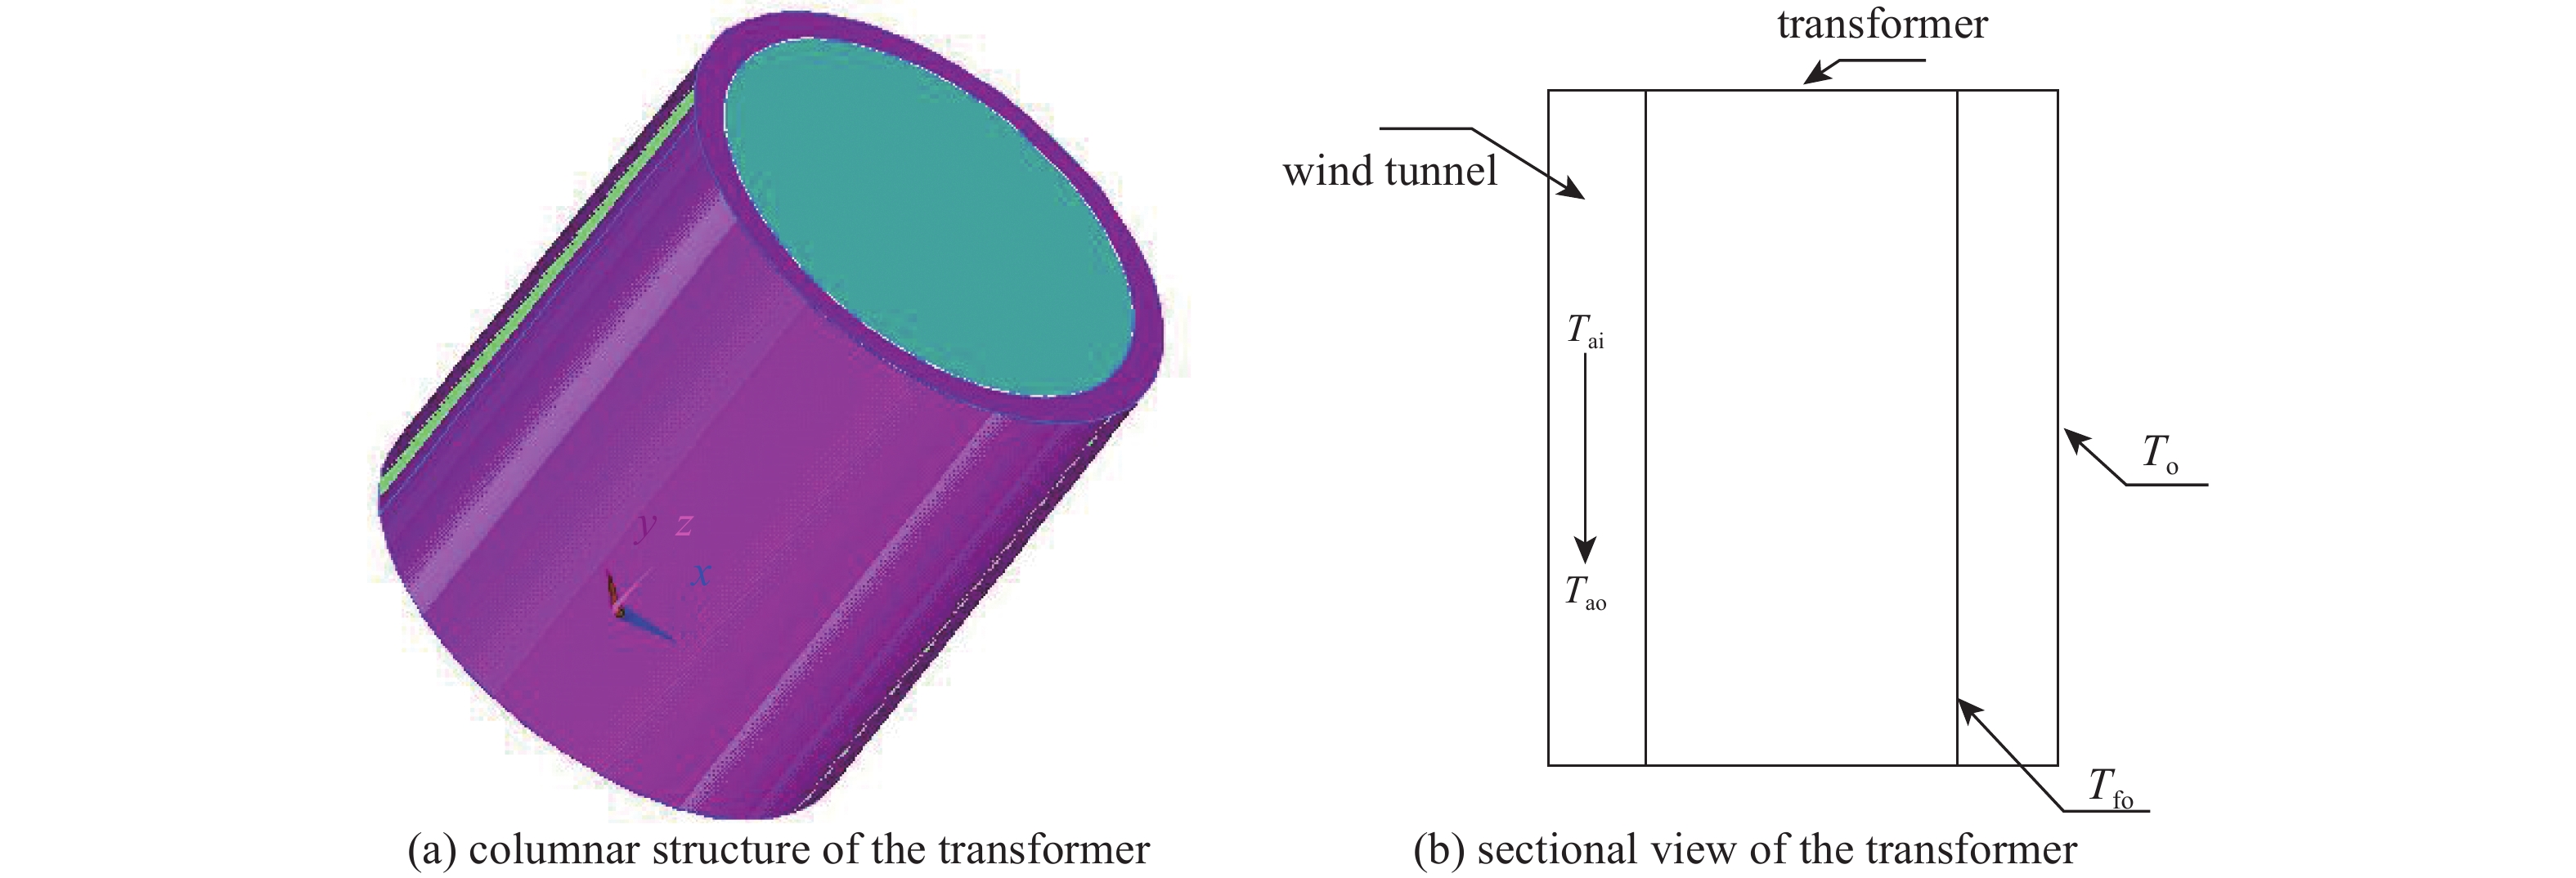 Simplified transformer diagram